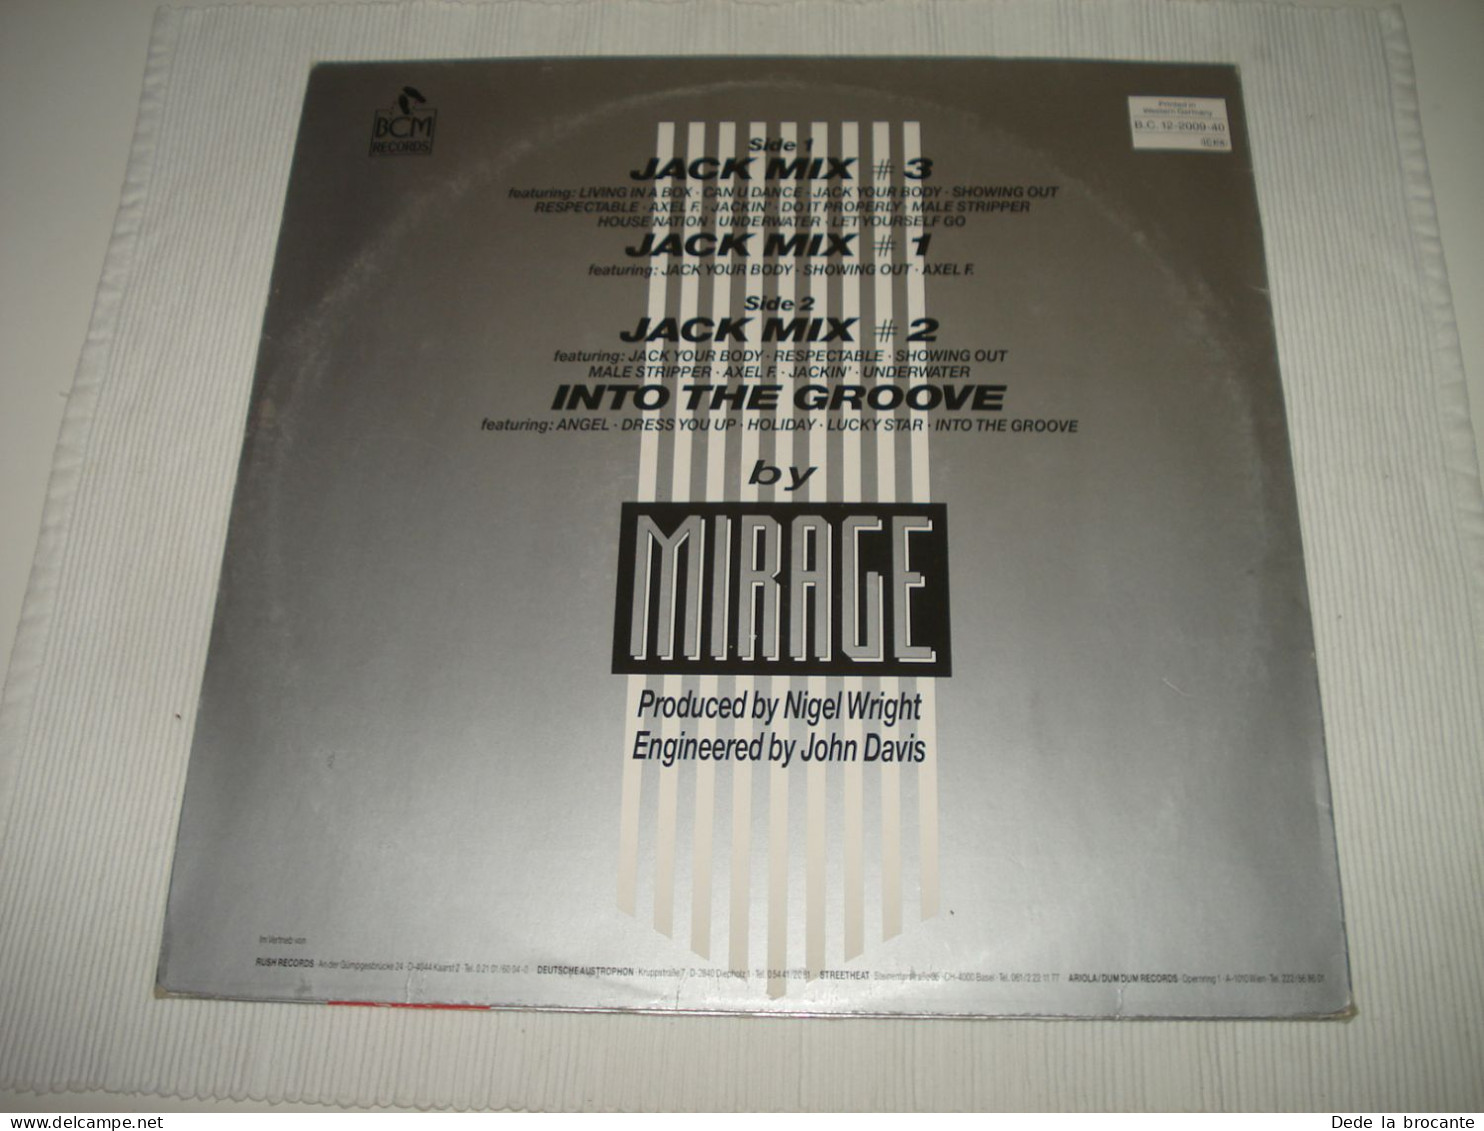 B8 / Mirage  – The Jack Mixes  33 RPM - B.C. 12-2009-40 - Ger -  1987 -  EX/EX - Formati Speciali